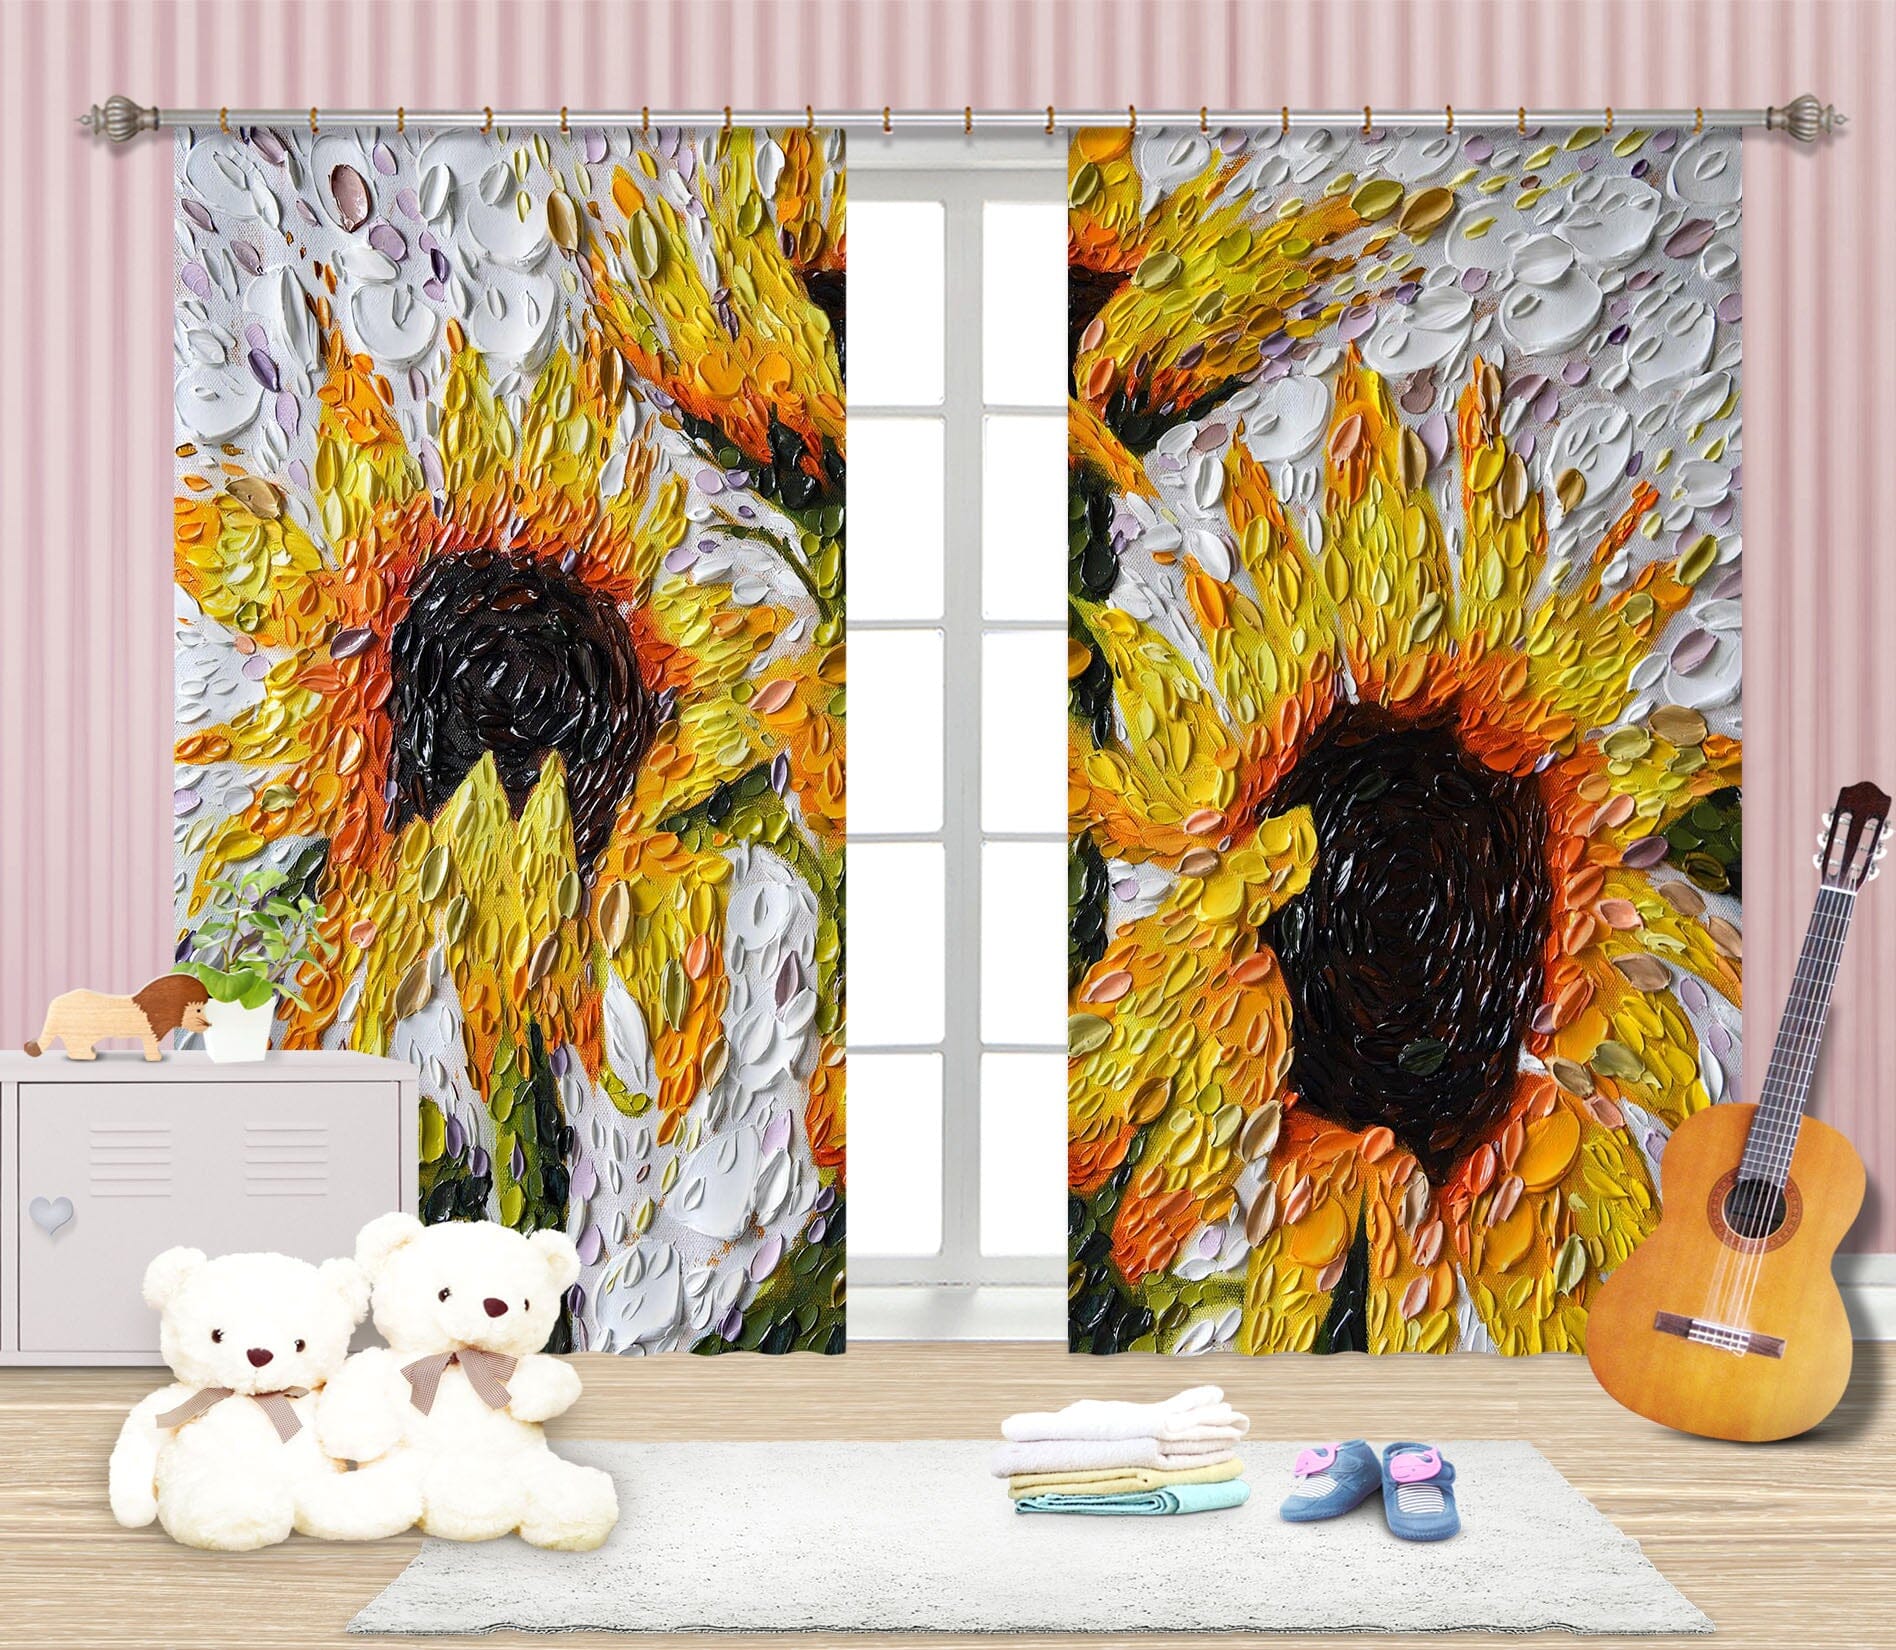 3D Sunflowers 048 Dena Tollefson Curtain Curtains Drapes Curtains AJ Creativity Home 